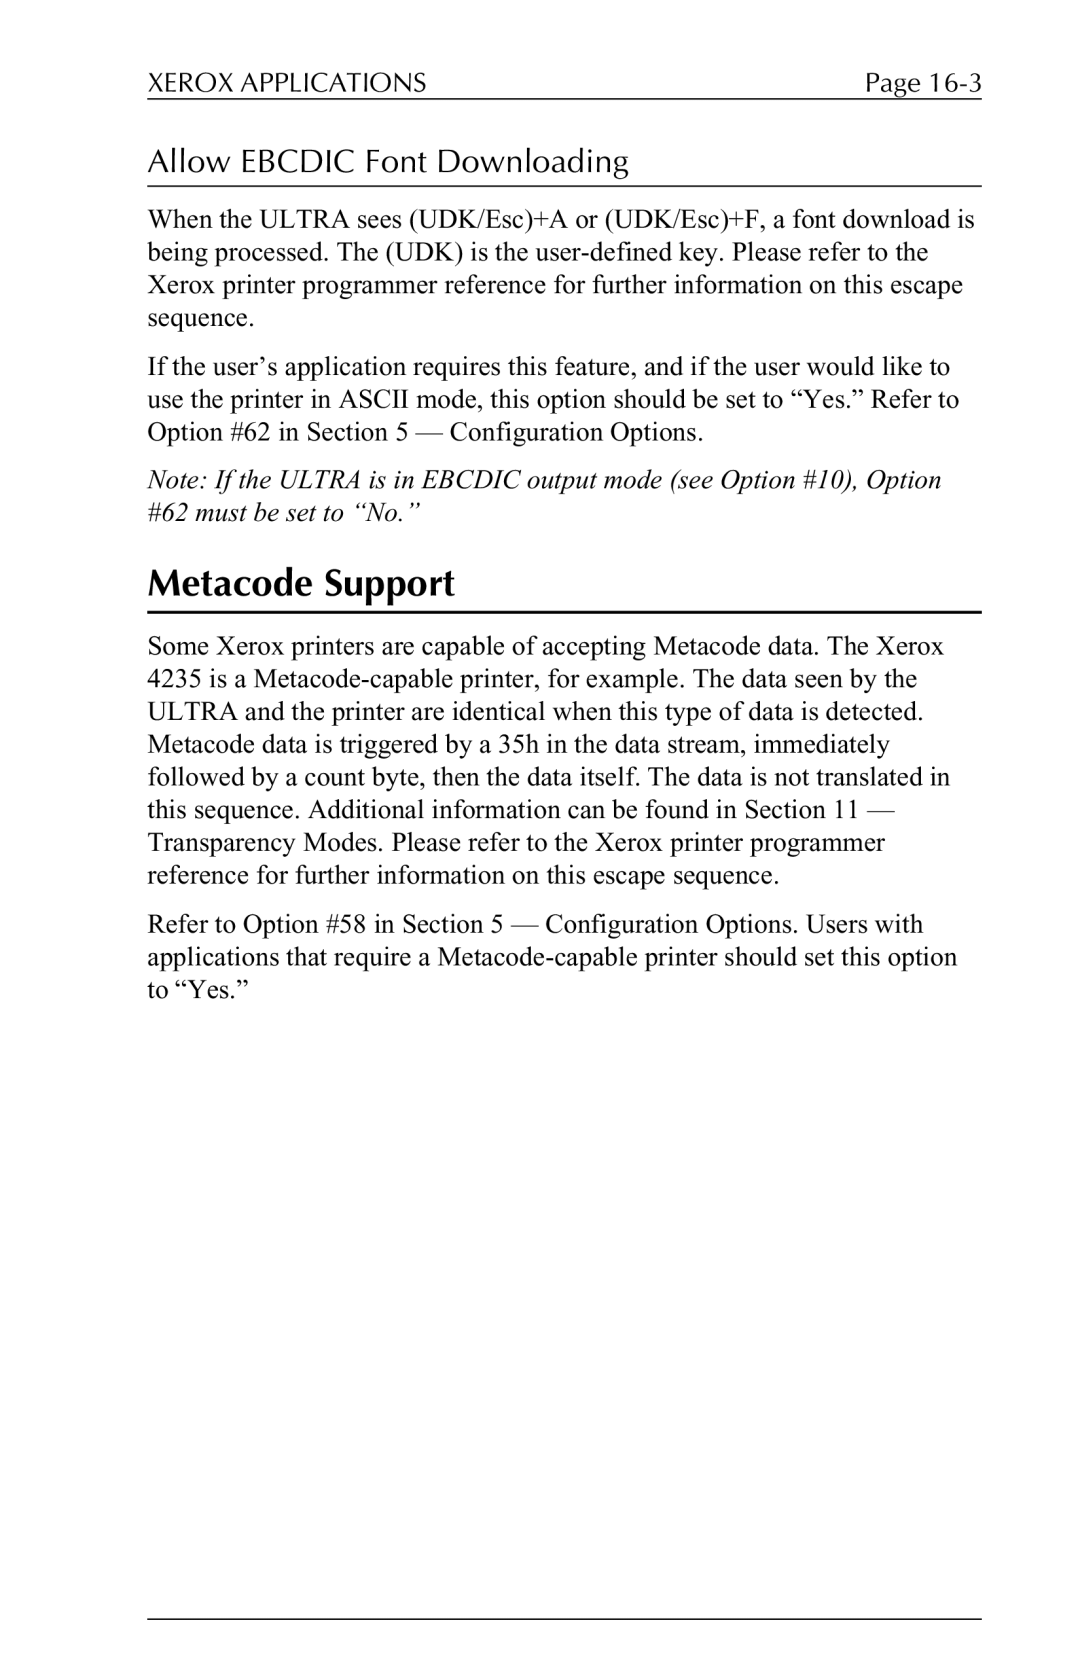 Agilent Technologies 6287 manual Metacode Support, Xerox Applications 